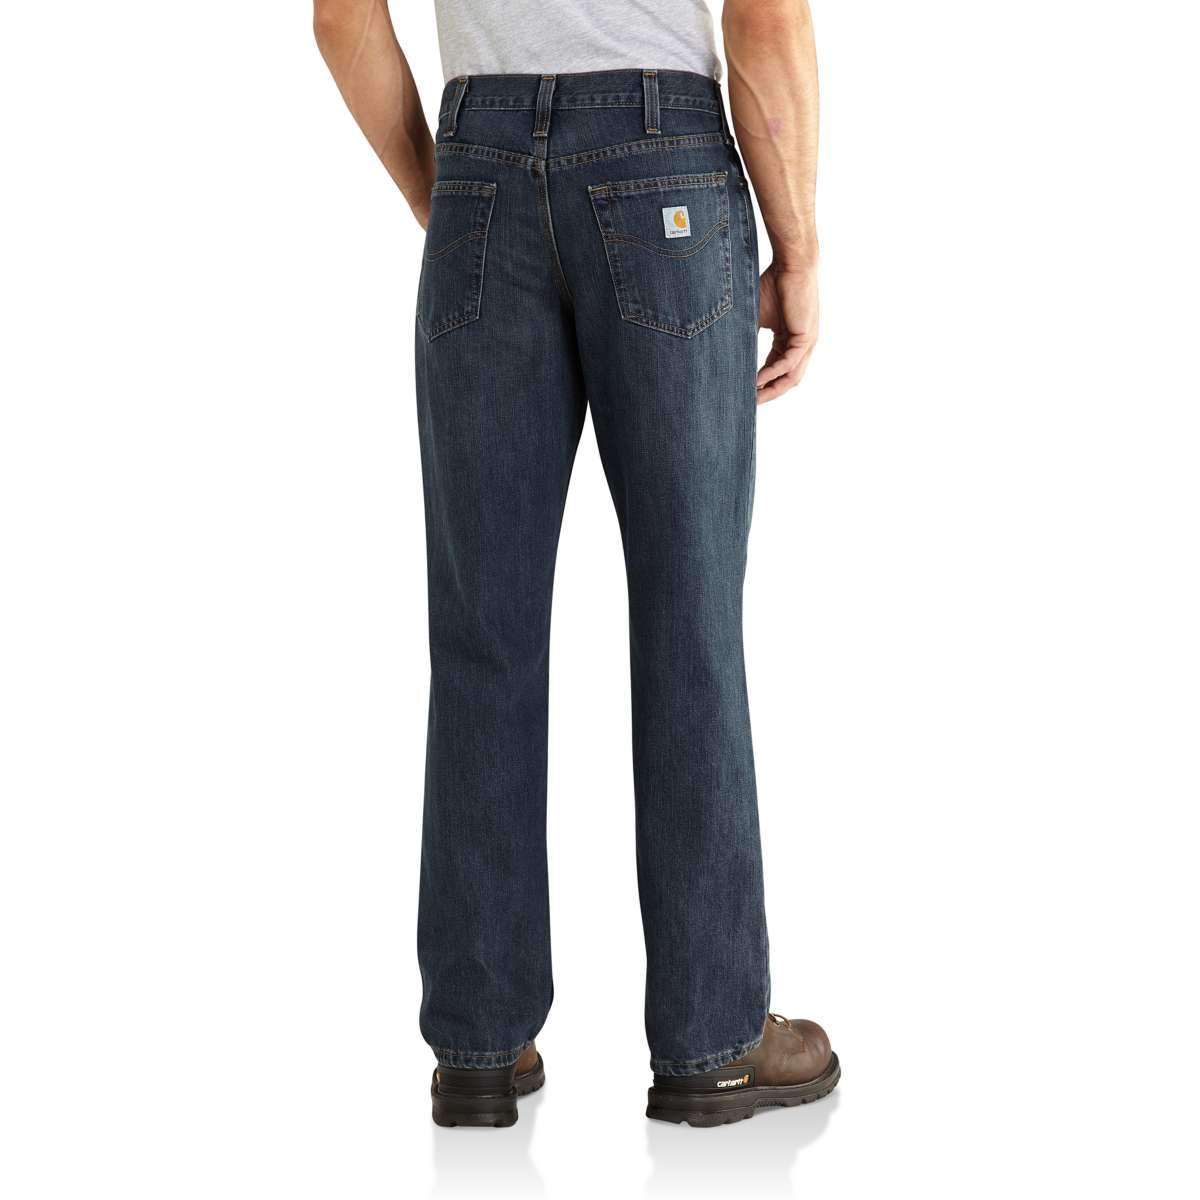 101483 - Carhartt Men's Relaxed Fit 5 Pocket Jean